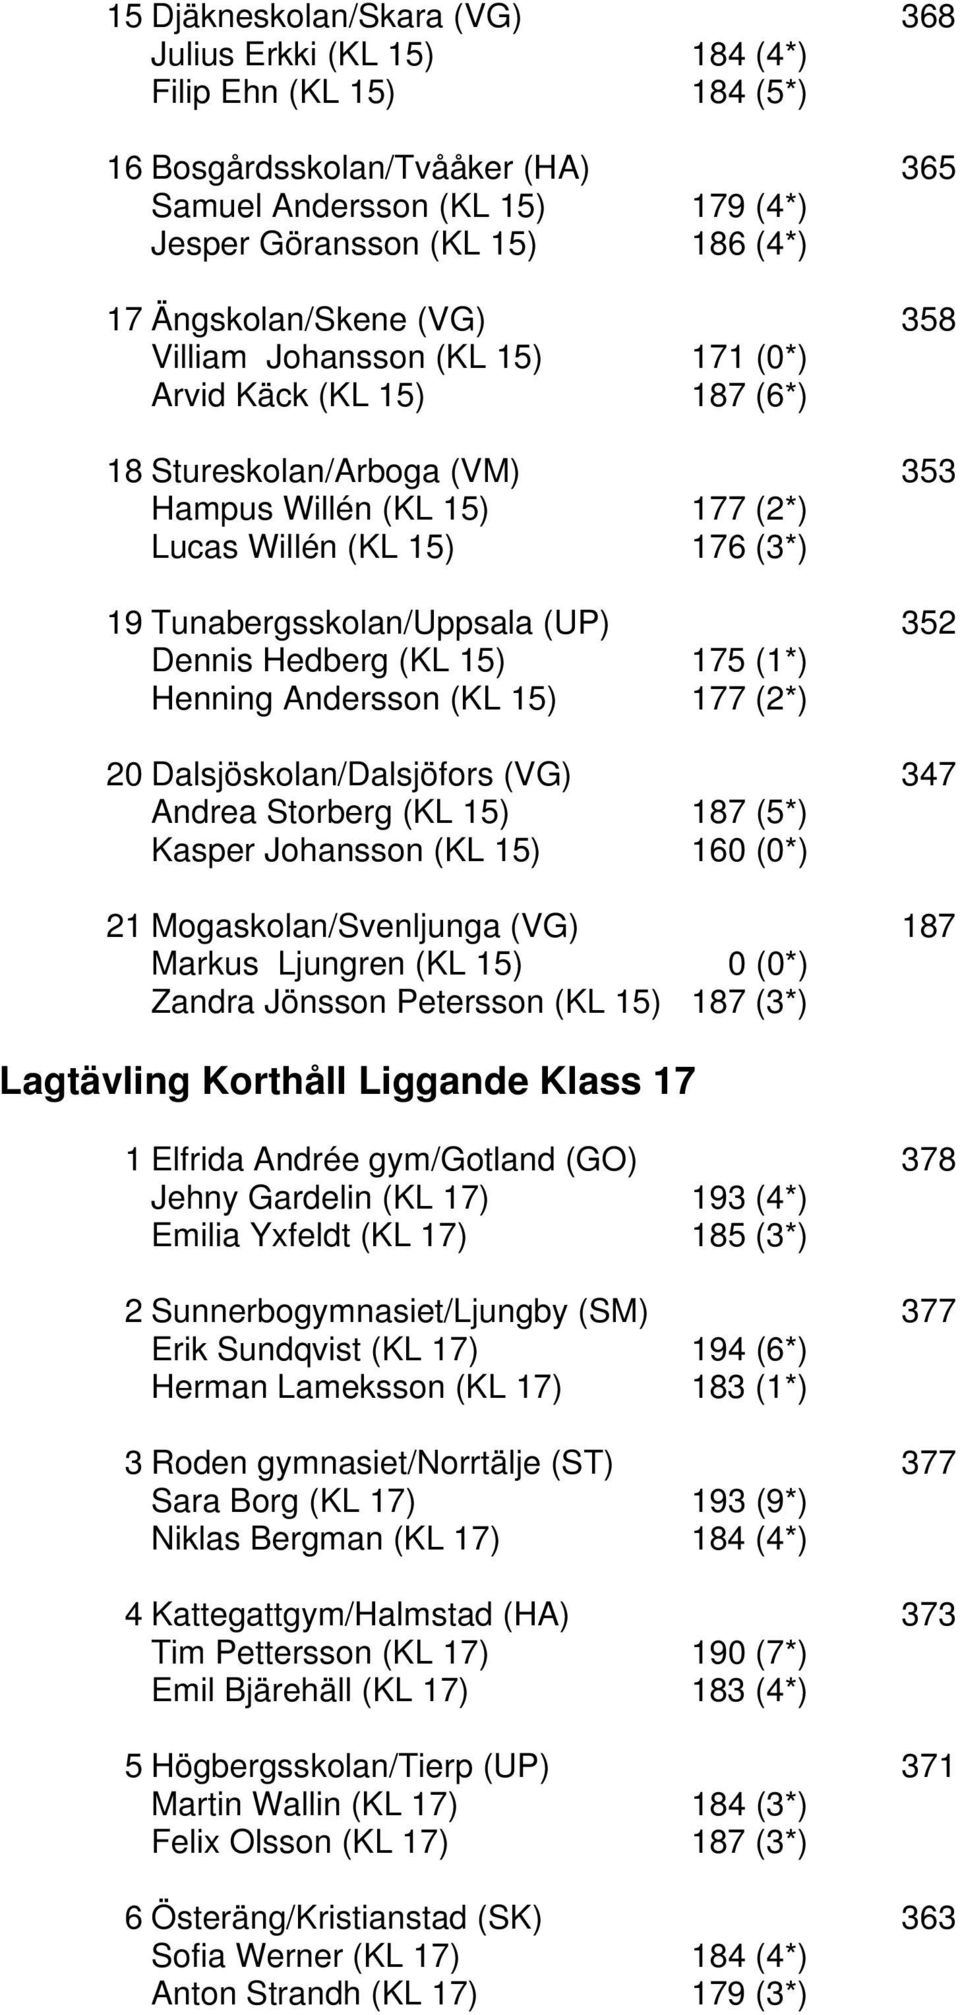 Tunabergsskolan/Uppsala (UP) 352 Dennis Hedberg (KL 15) 175 (1*) Henning Andersson (KL 15) 177 (2*) 20 Dalsjöskolan/Dalsjöfors (VG) 347 Andrea Storberg (KL 15) 187 (5*) Kasper Johansson (KL 15) 160